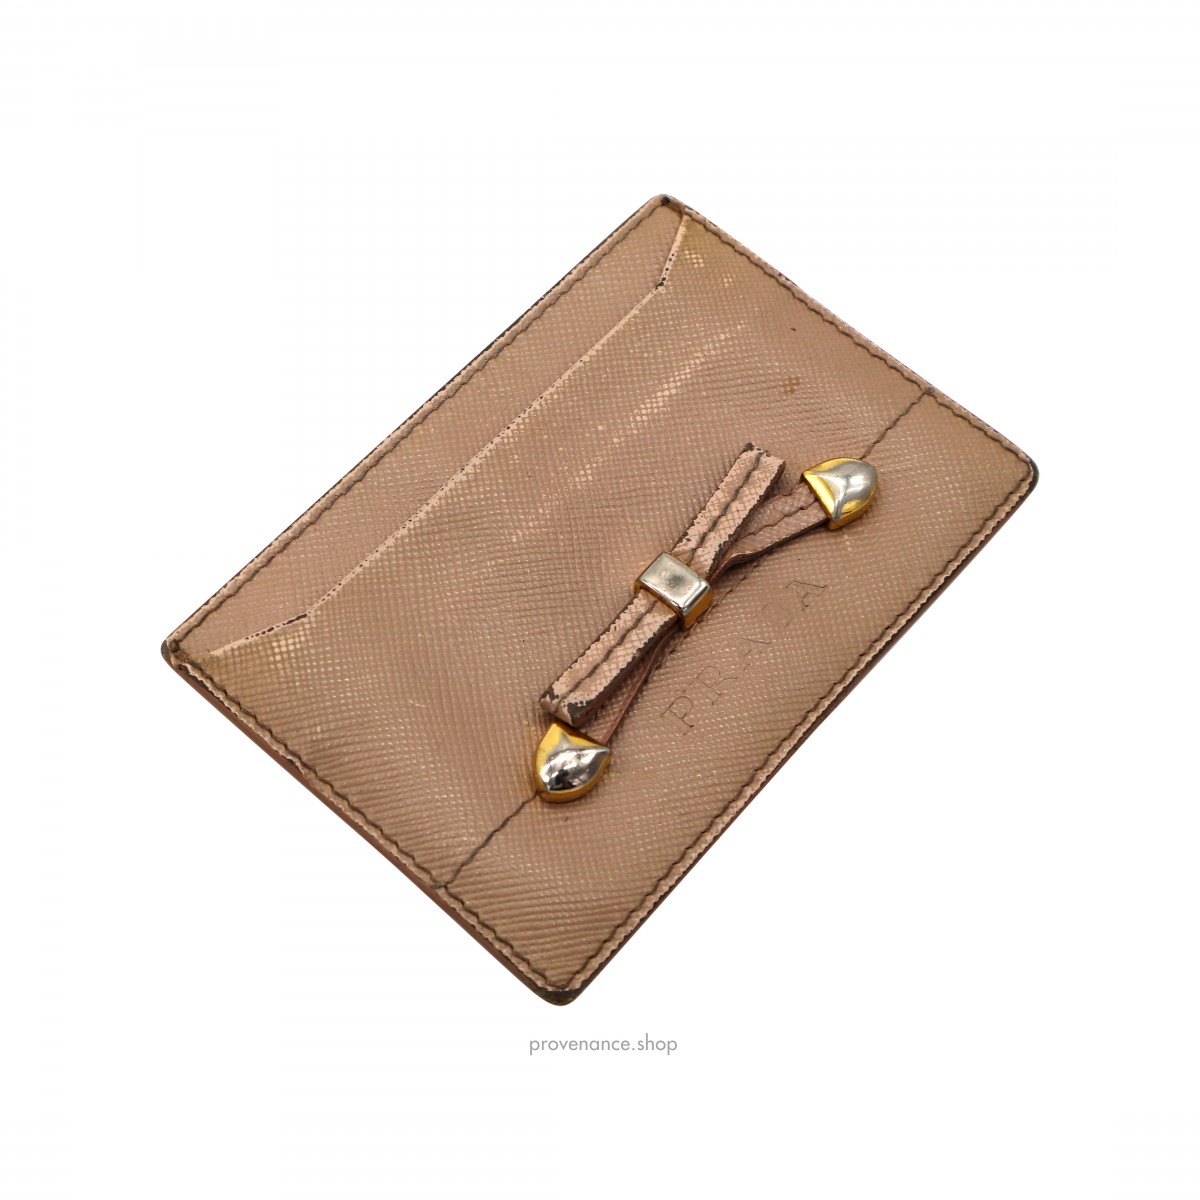 Prada Cardholder Wallet - Peach Saffiano Leather - 4